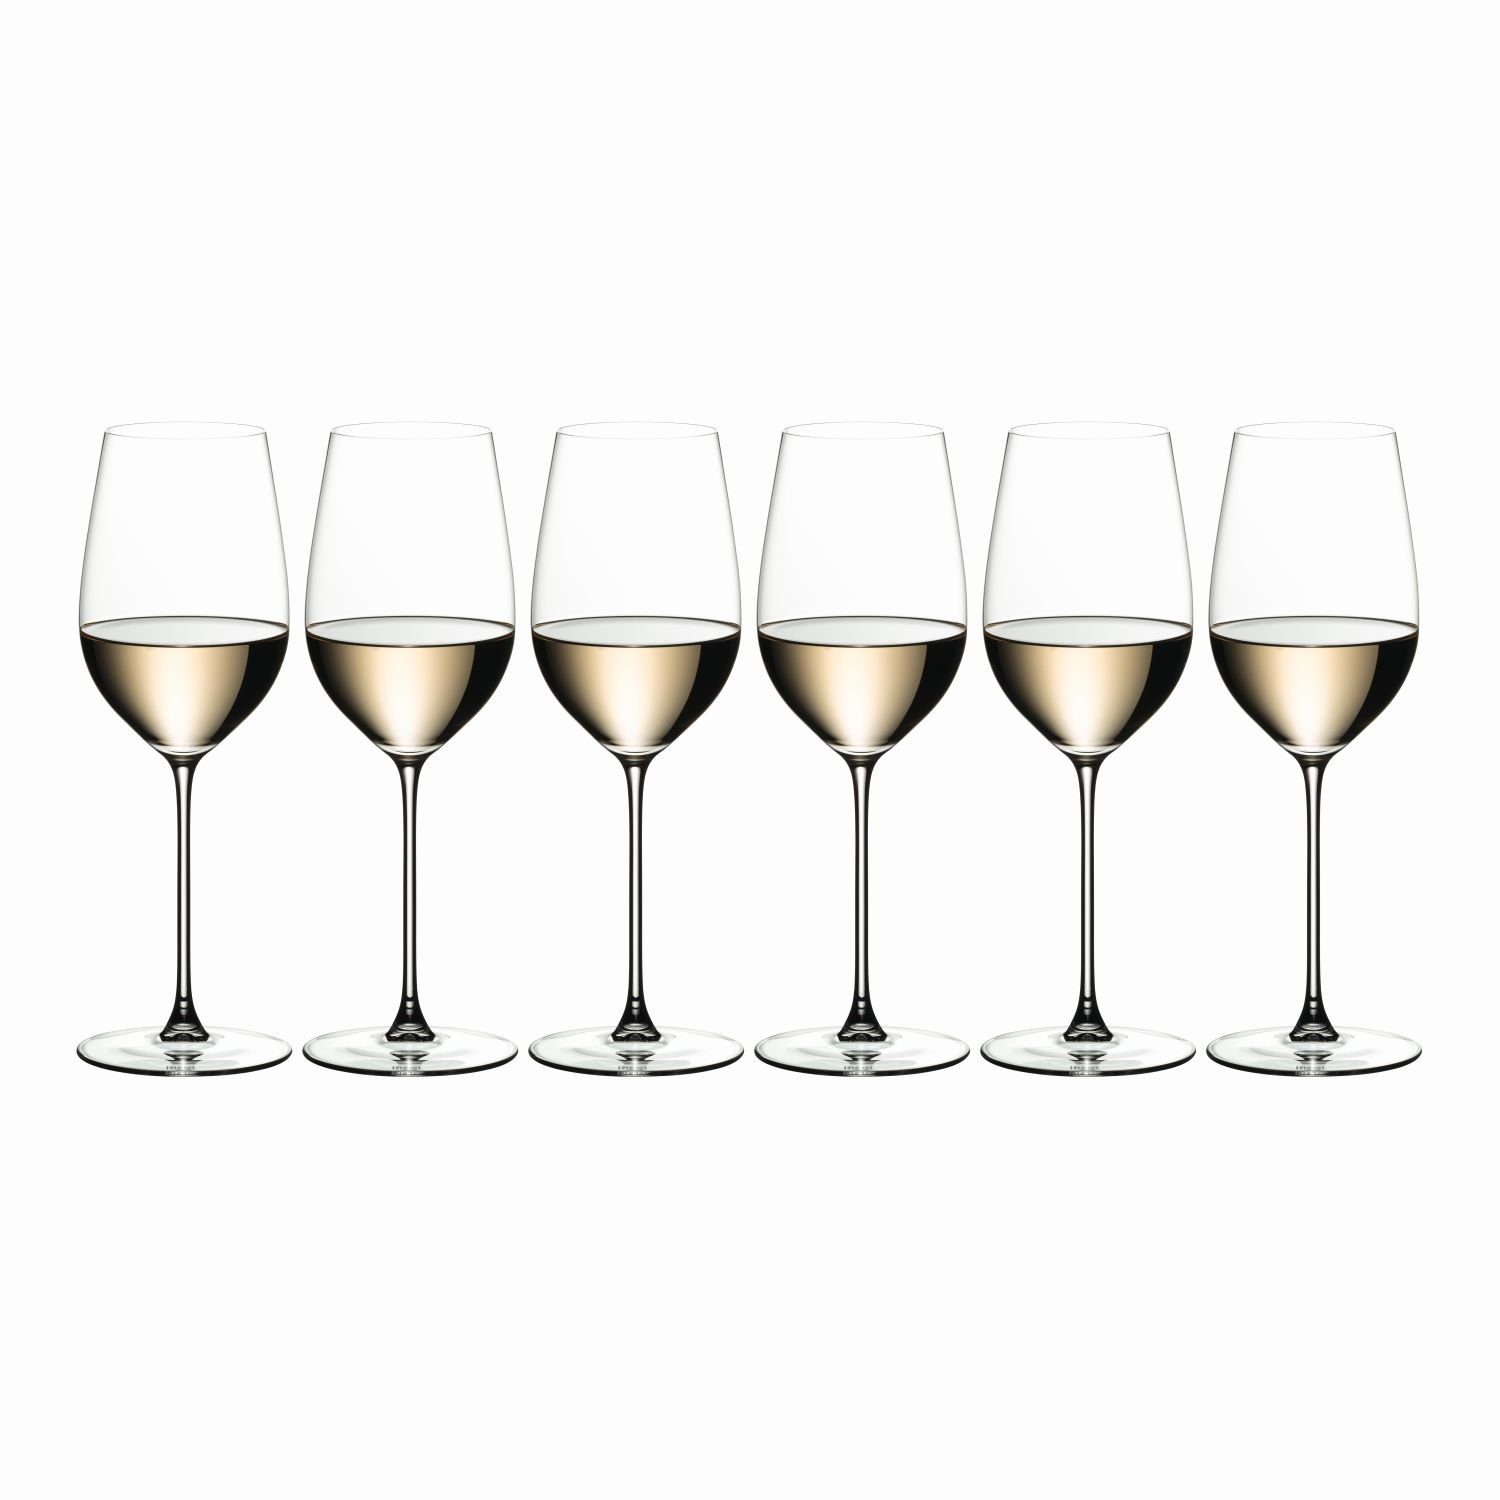 RIEDEL THE WINE GLASS COMPANY Weinglas Veritas Riesling Zinfandel, Kristallglas